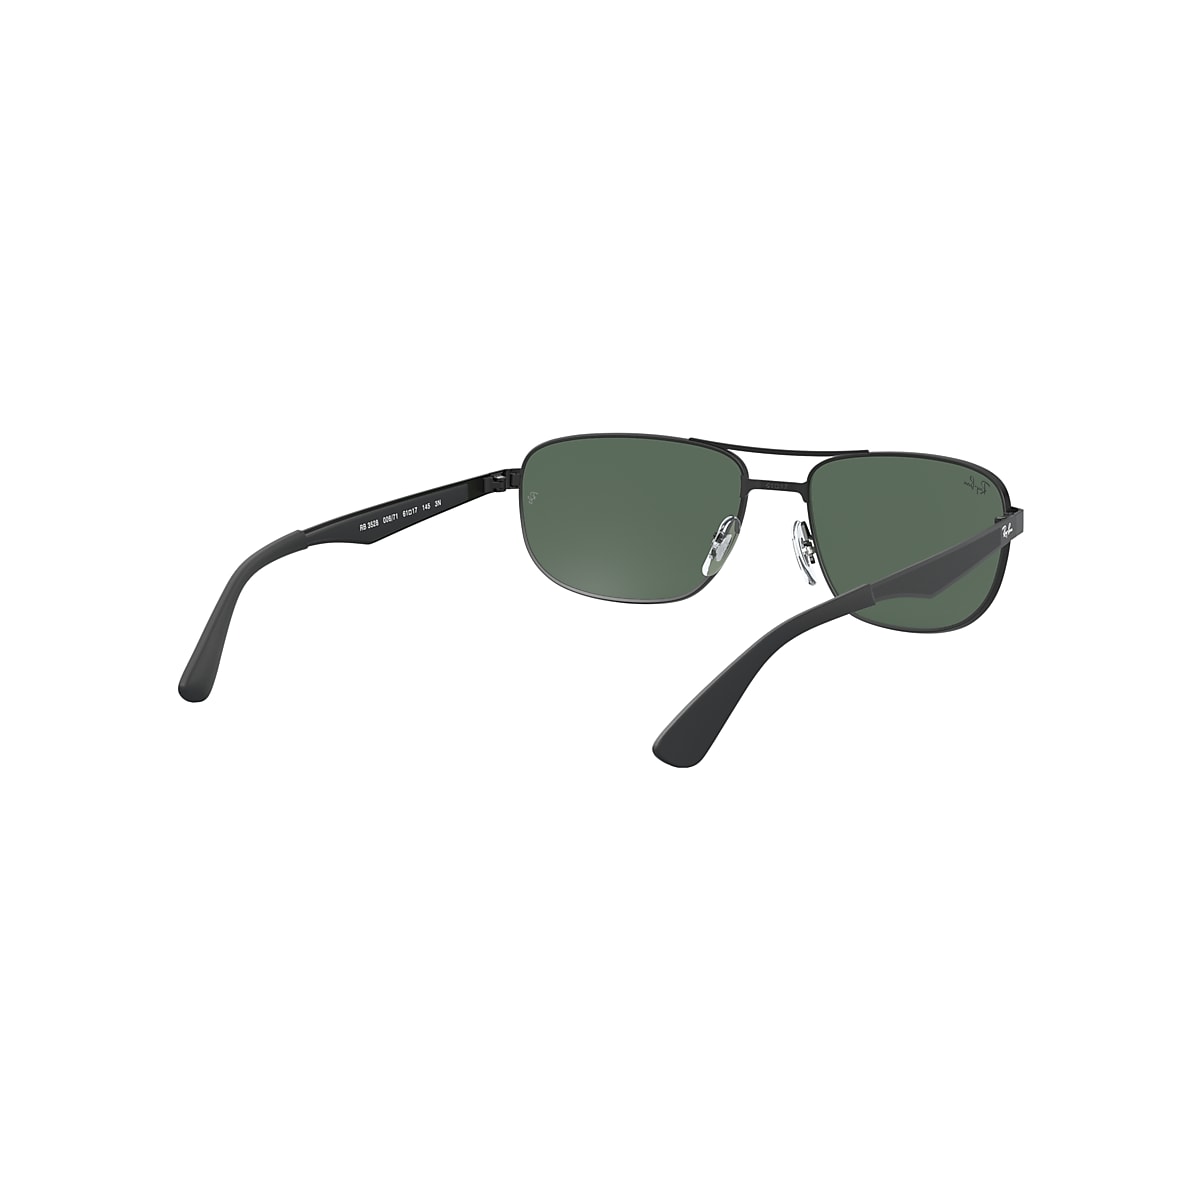 RB3528 - ray-ban sunglasses